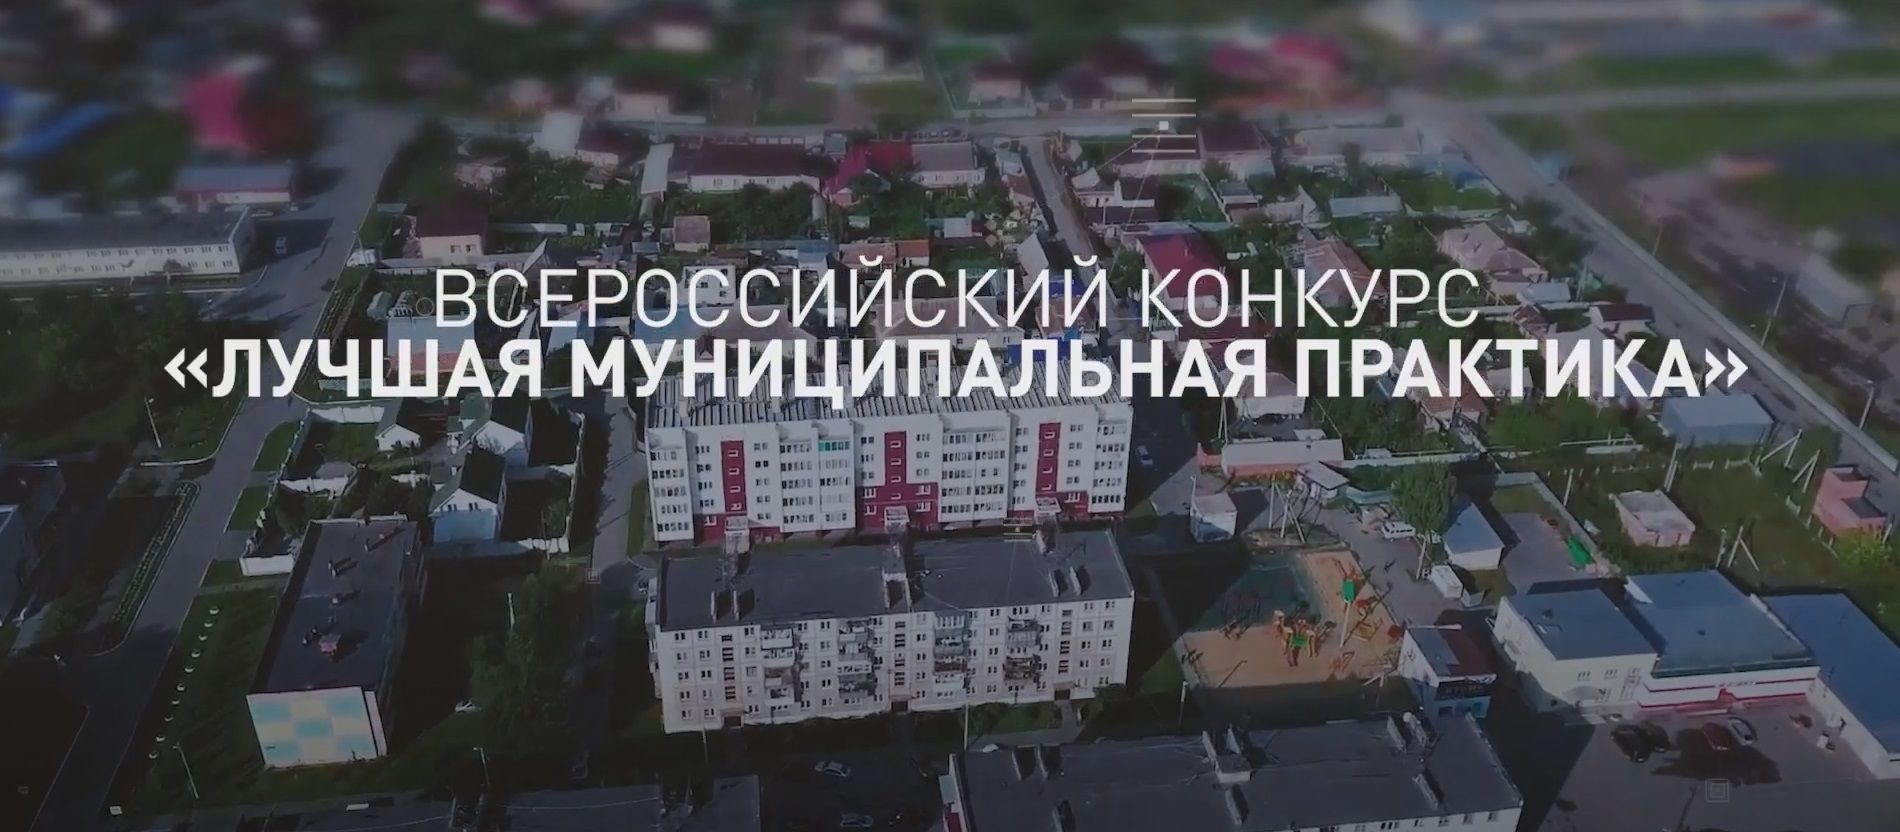 Два поселения Татарстана получат до 75 млн рублей